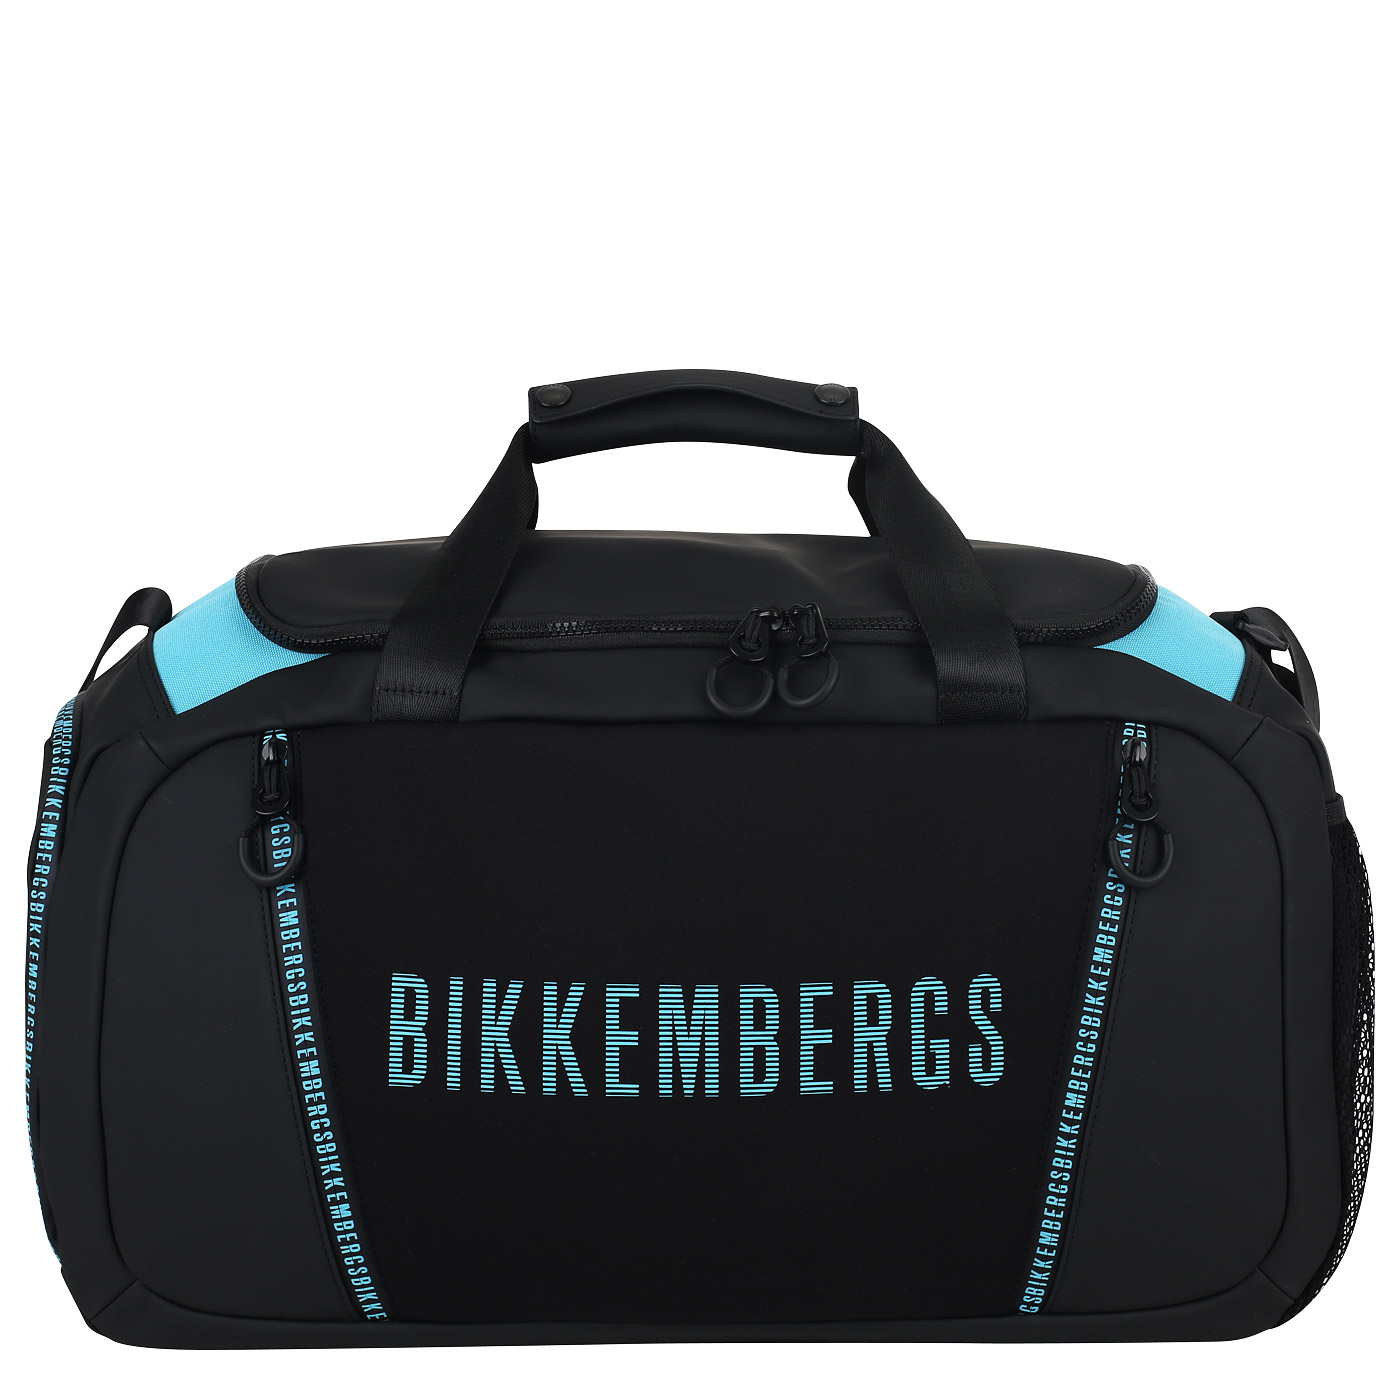 Bikkembergs Дорожная сумка